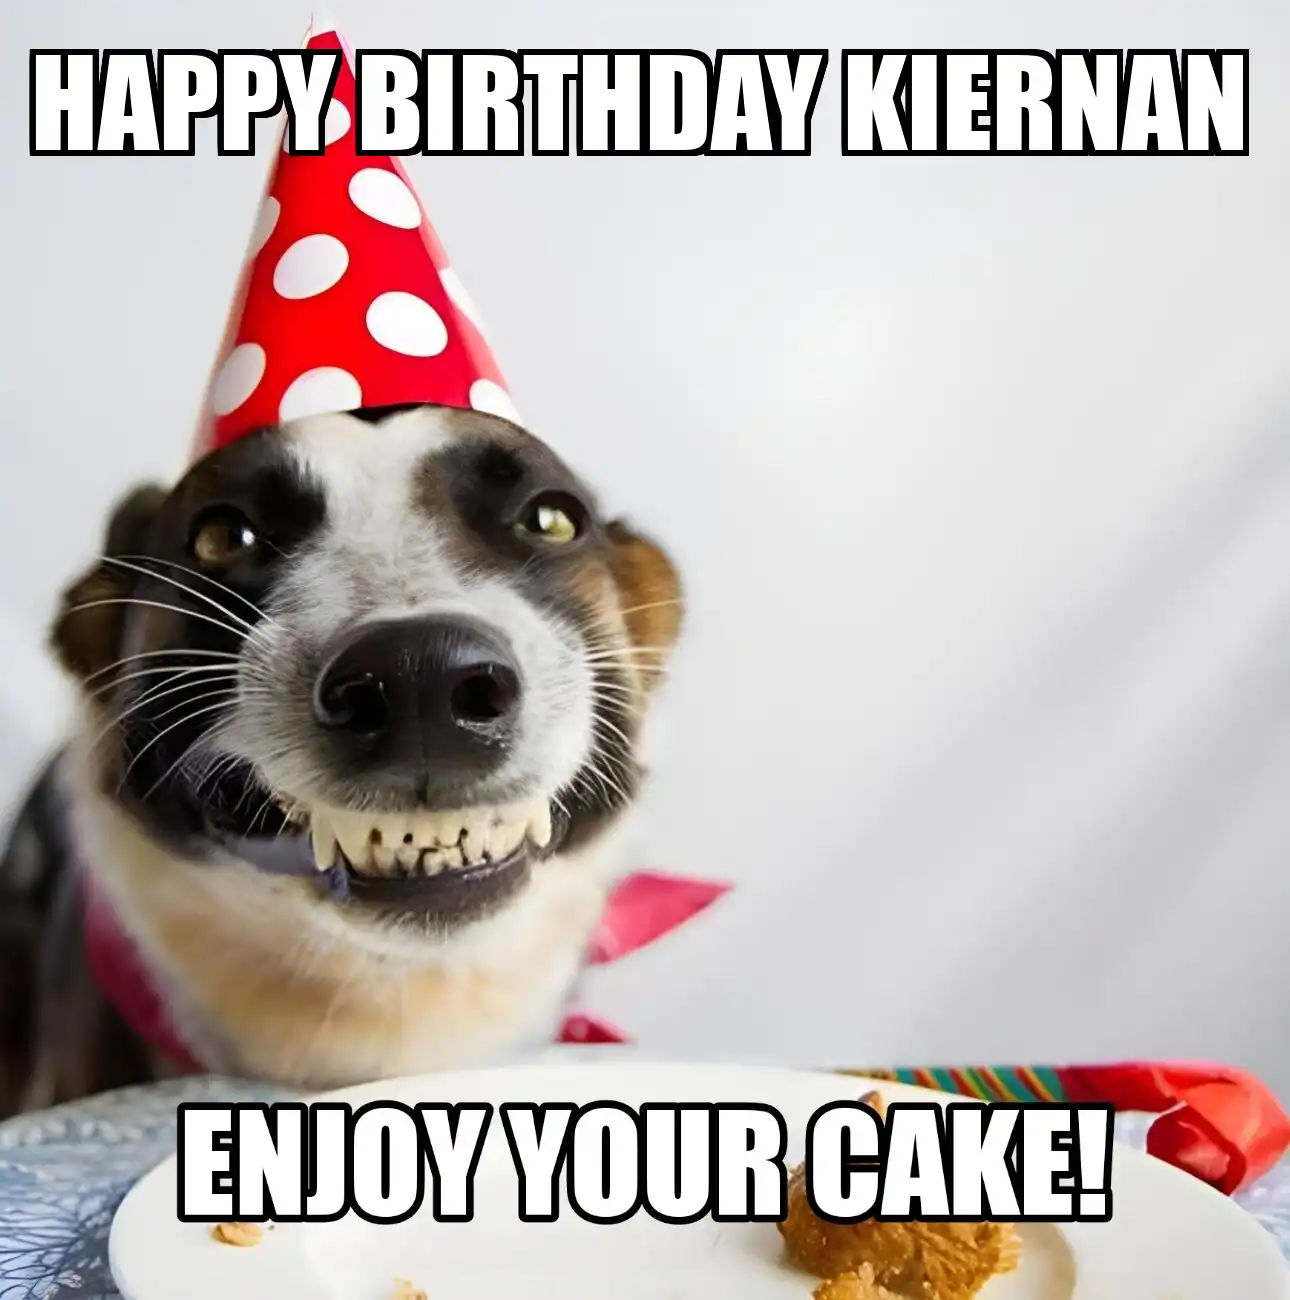 Happy Birthday Kiernan Enjoy Your Cake Dog Meme